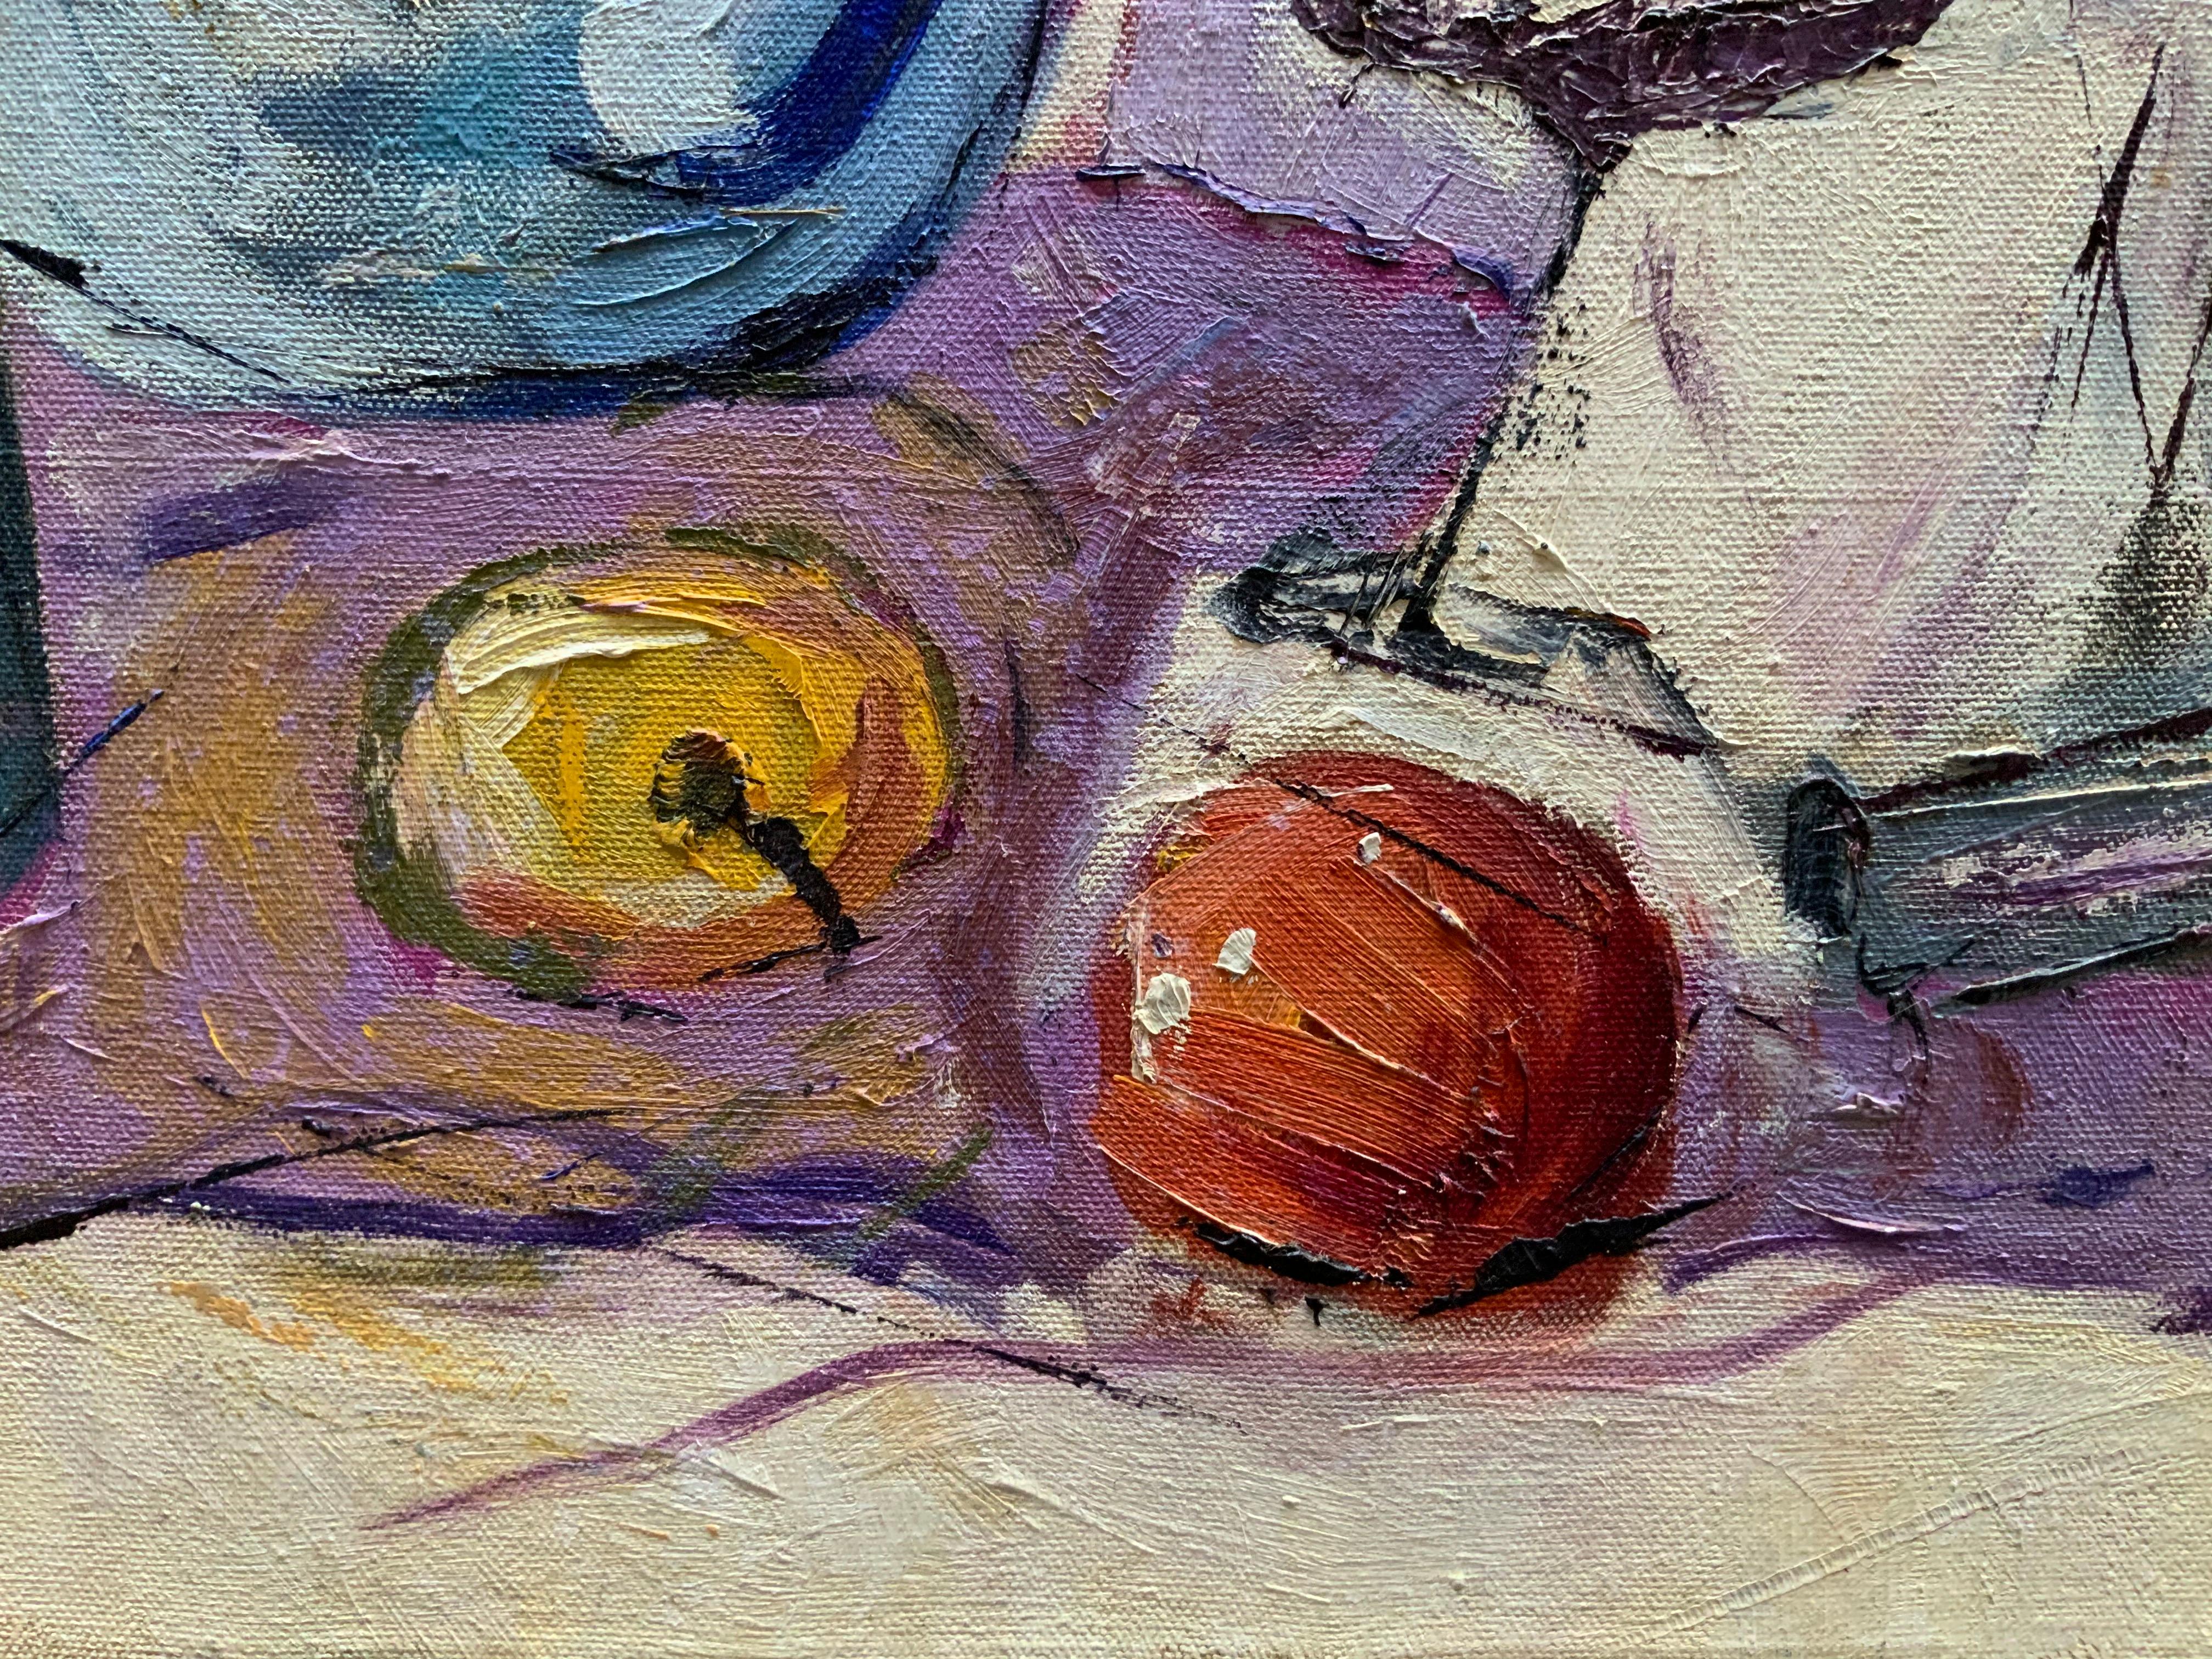 Canvas William Krasnoborski Still Life No. 2 Purple Painting